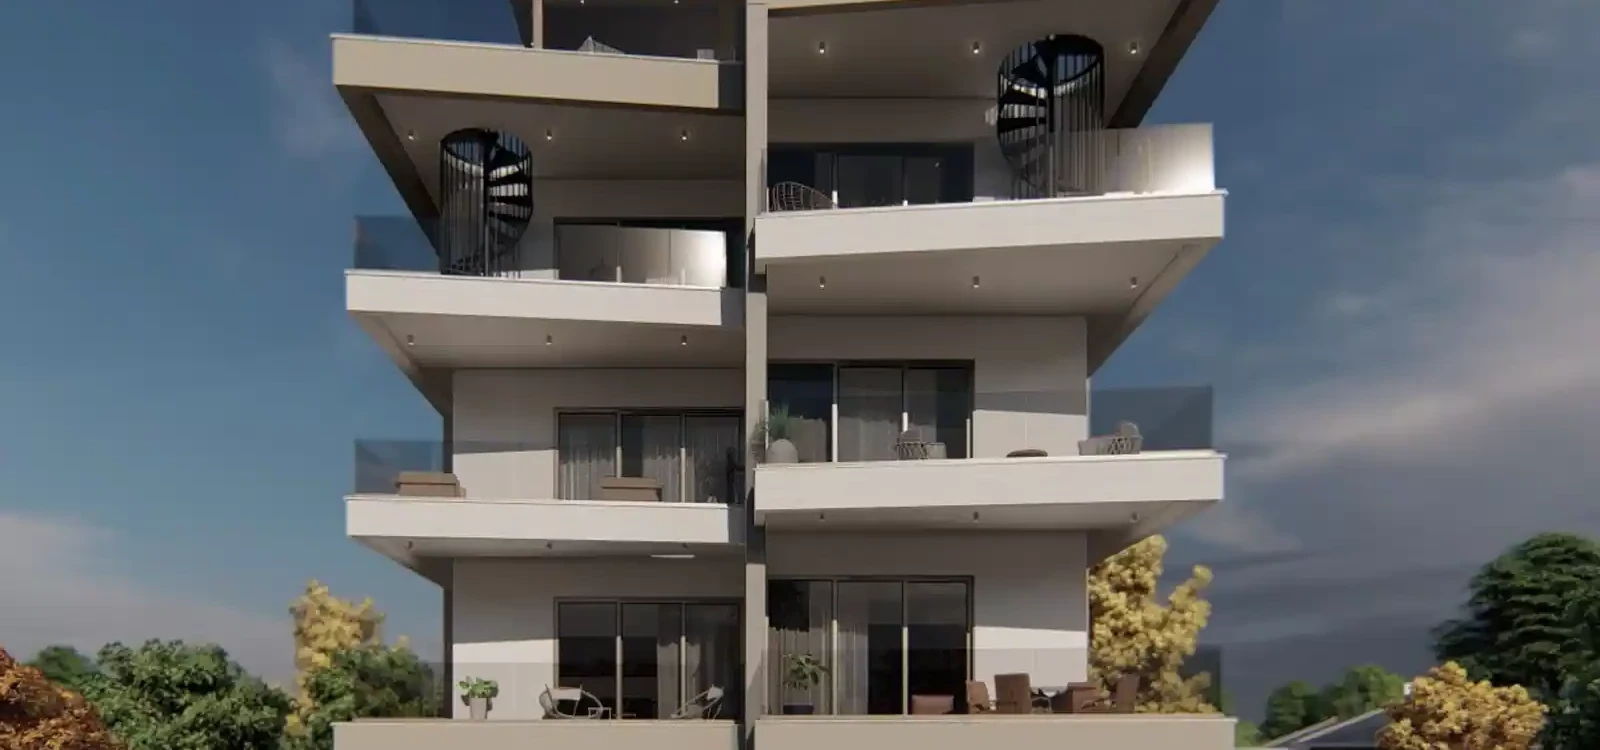 3-bedroom penthouse fоr sаle €575.000, image 1